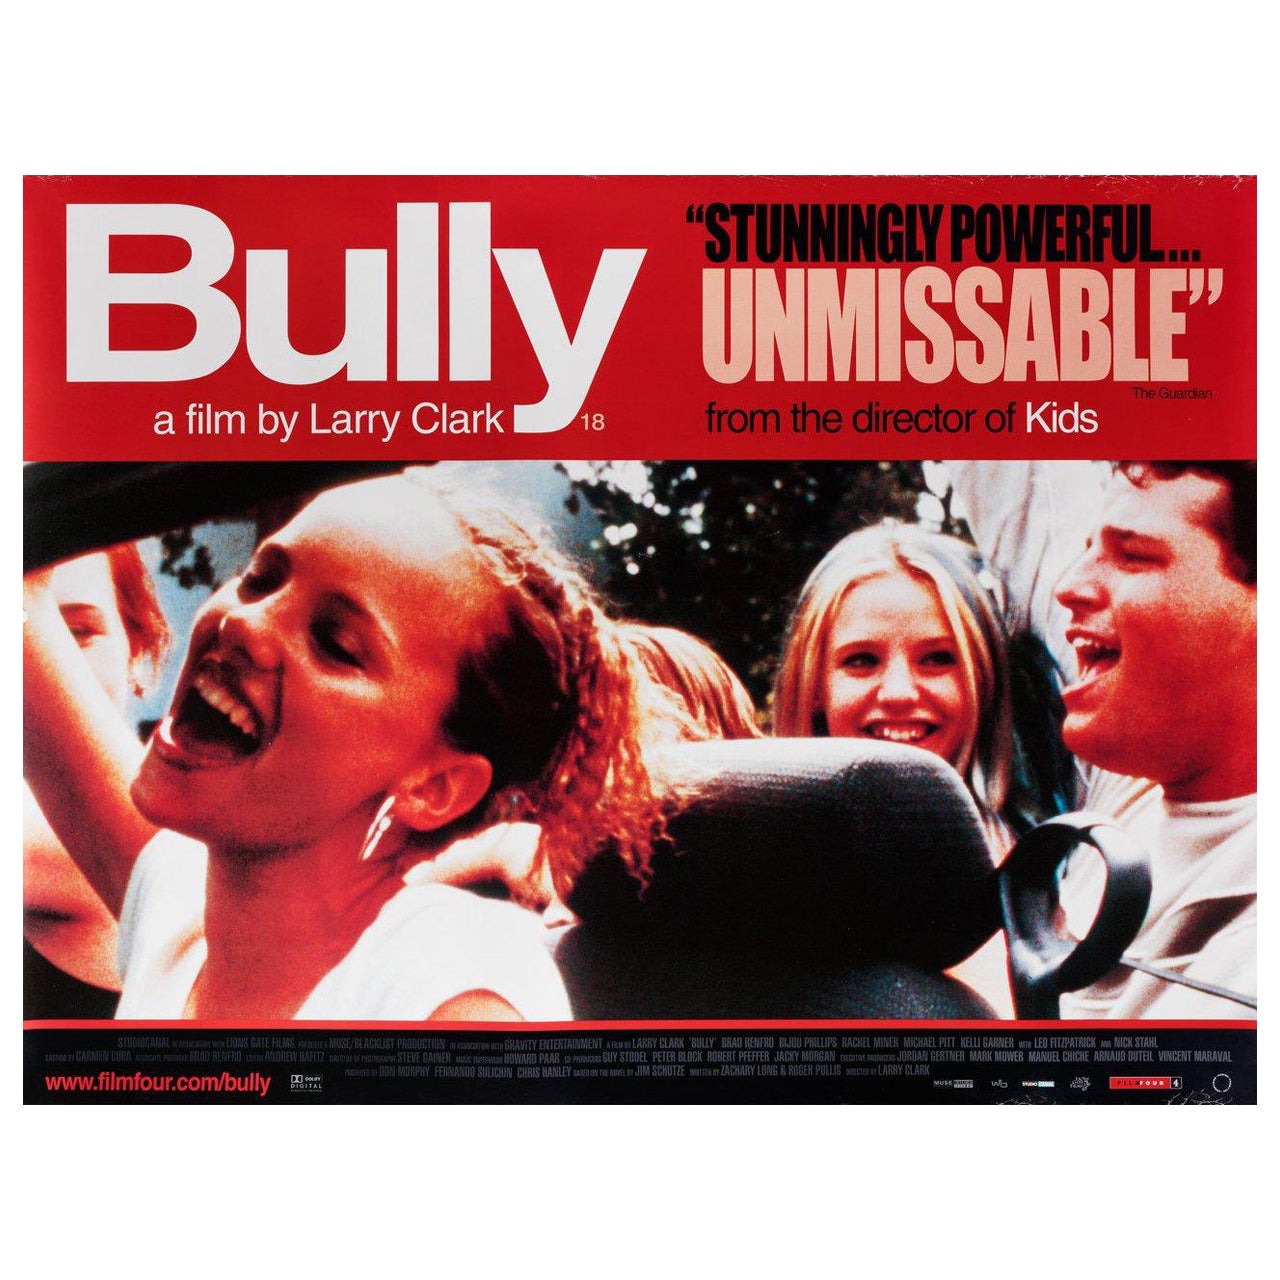 Affiche du film britannique Bully, 2001